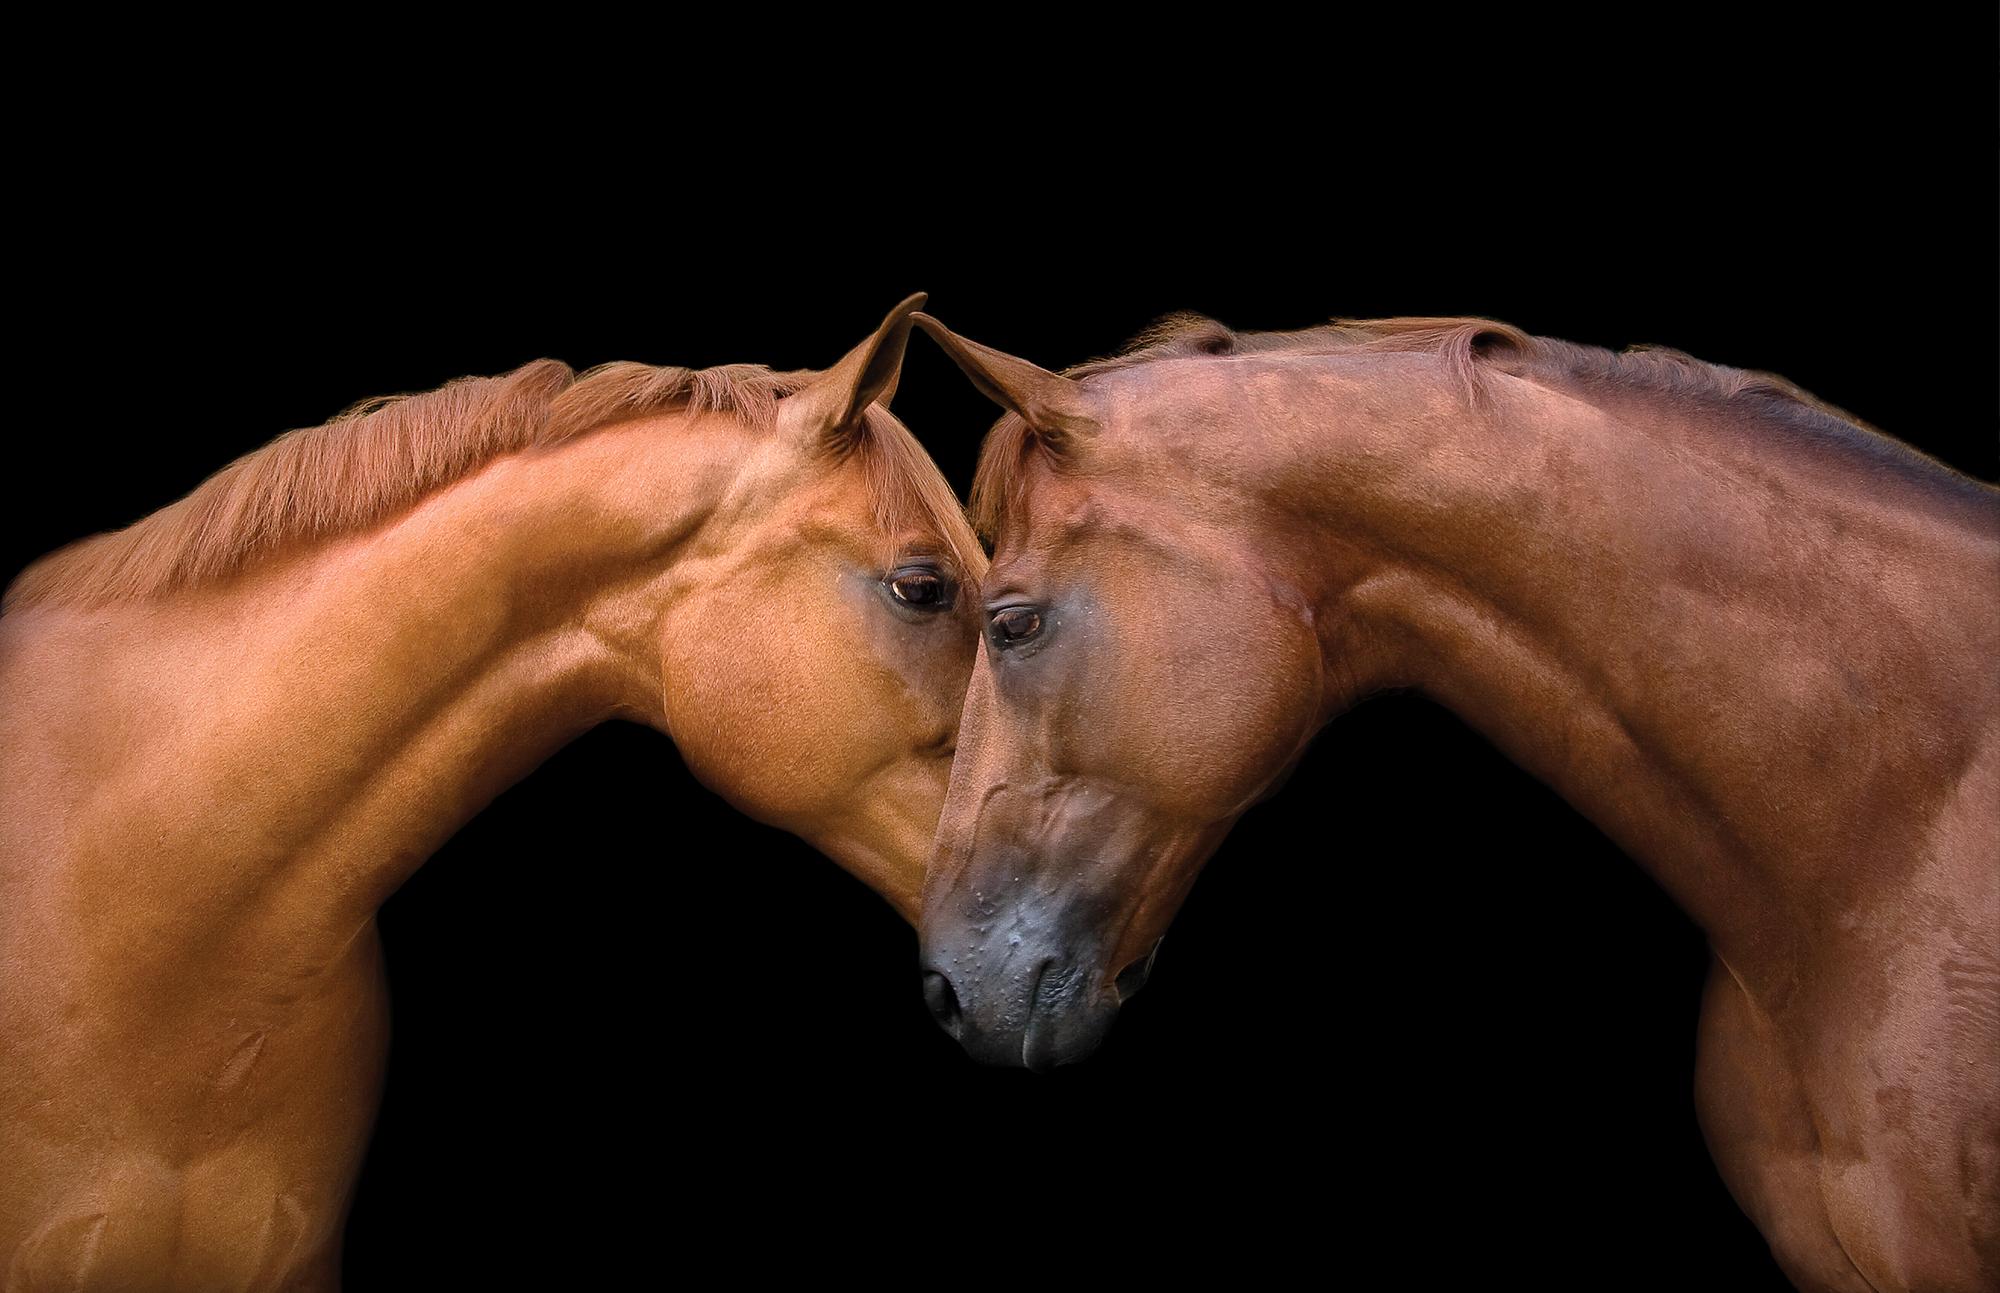 Bob Tabor Figurative Photograph - Kissing Horses-Edition of 18